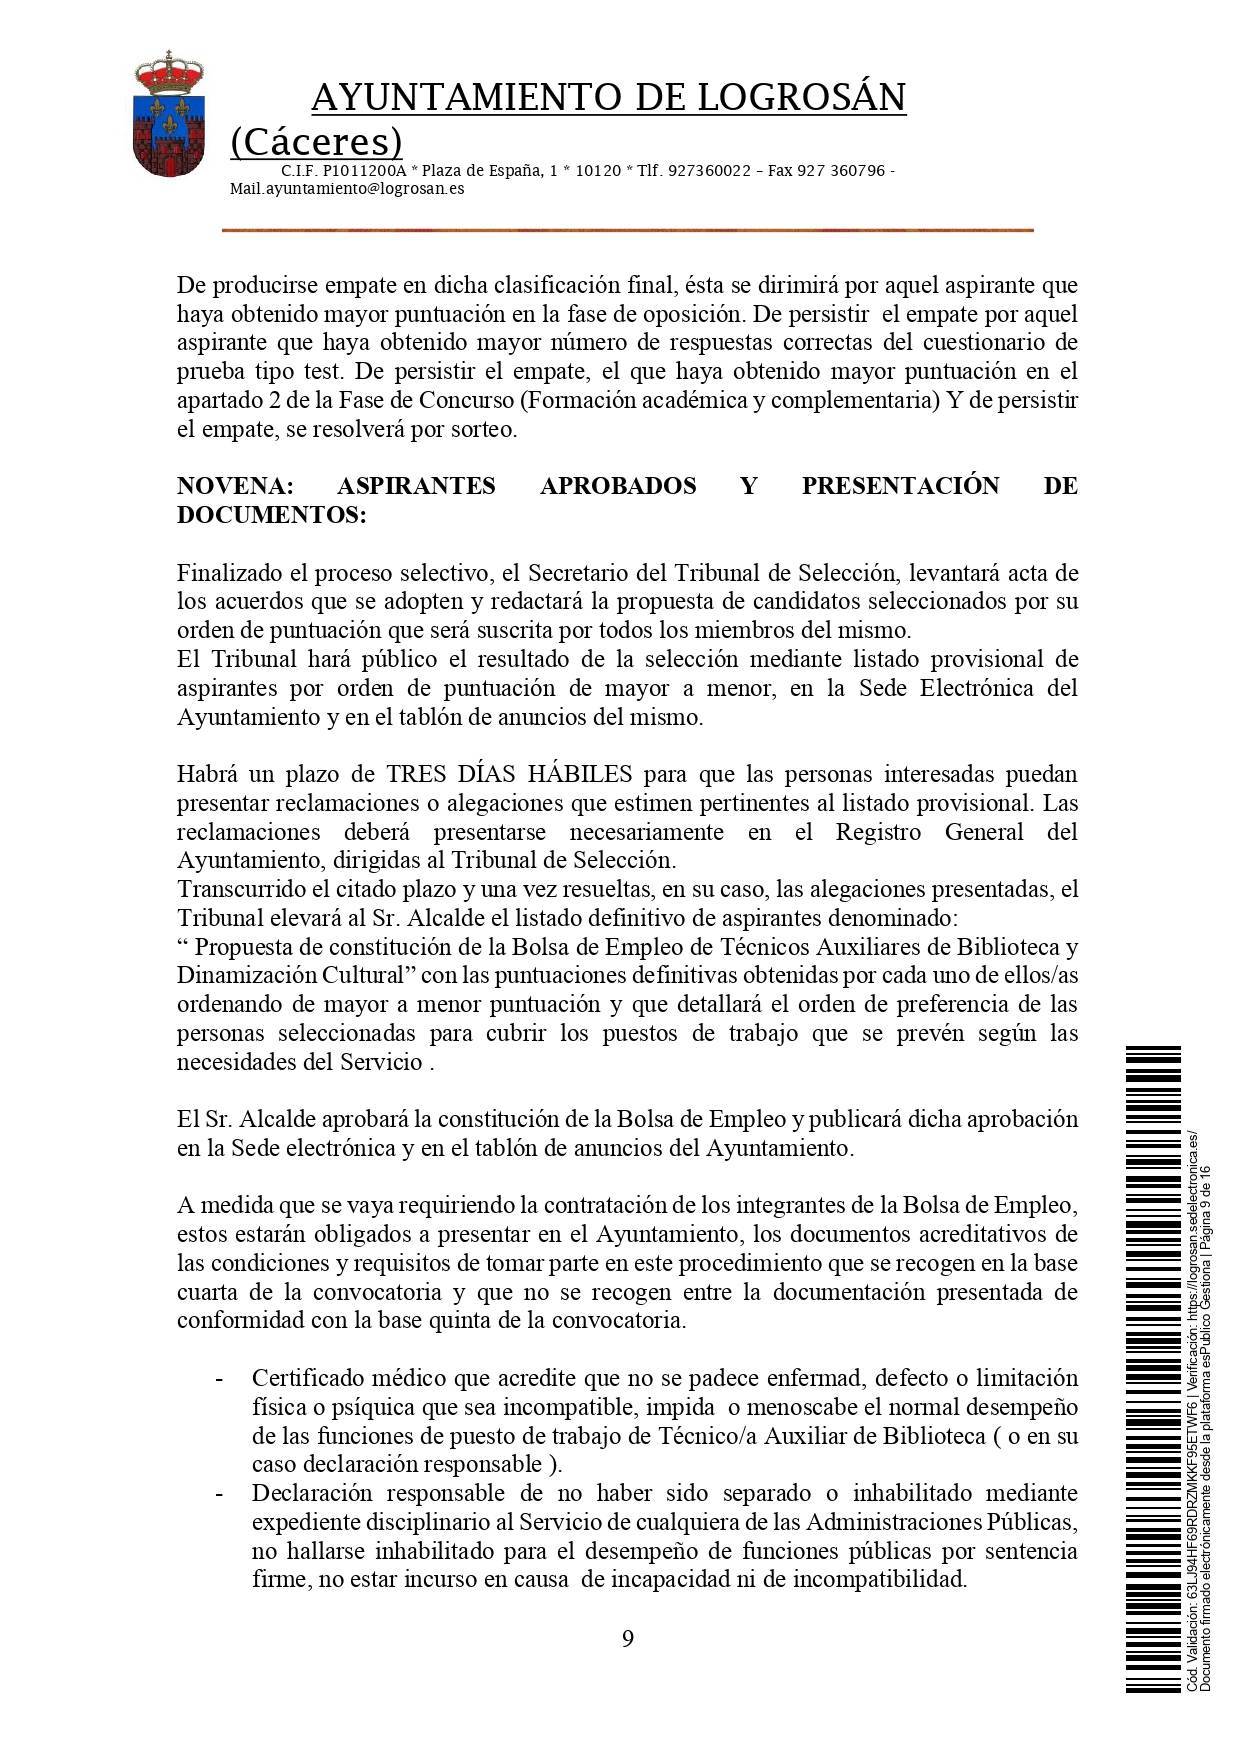 Técnicos-as auxiliar de biblioteca y dinamizador-a cultural (2021) - Logrosán (Cáceres) 9